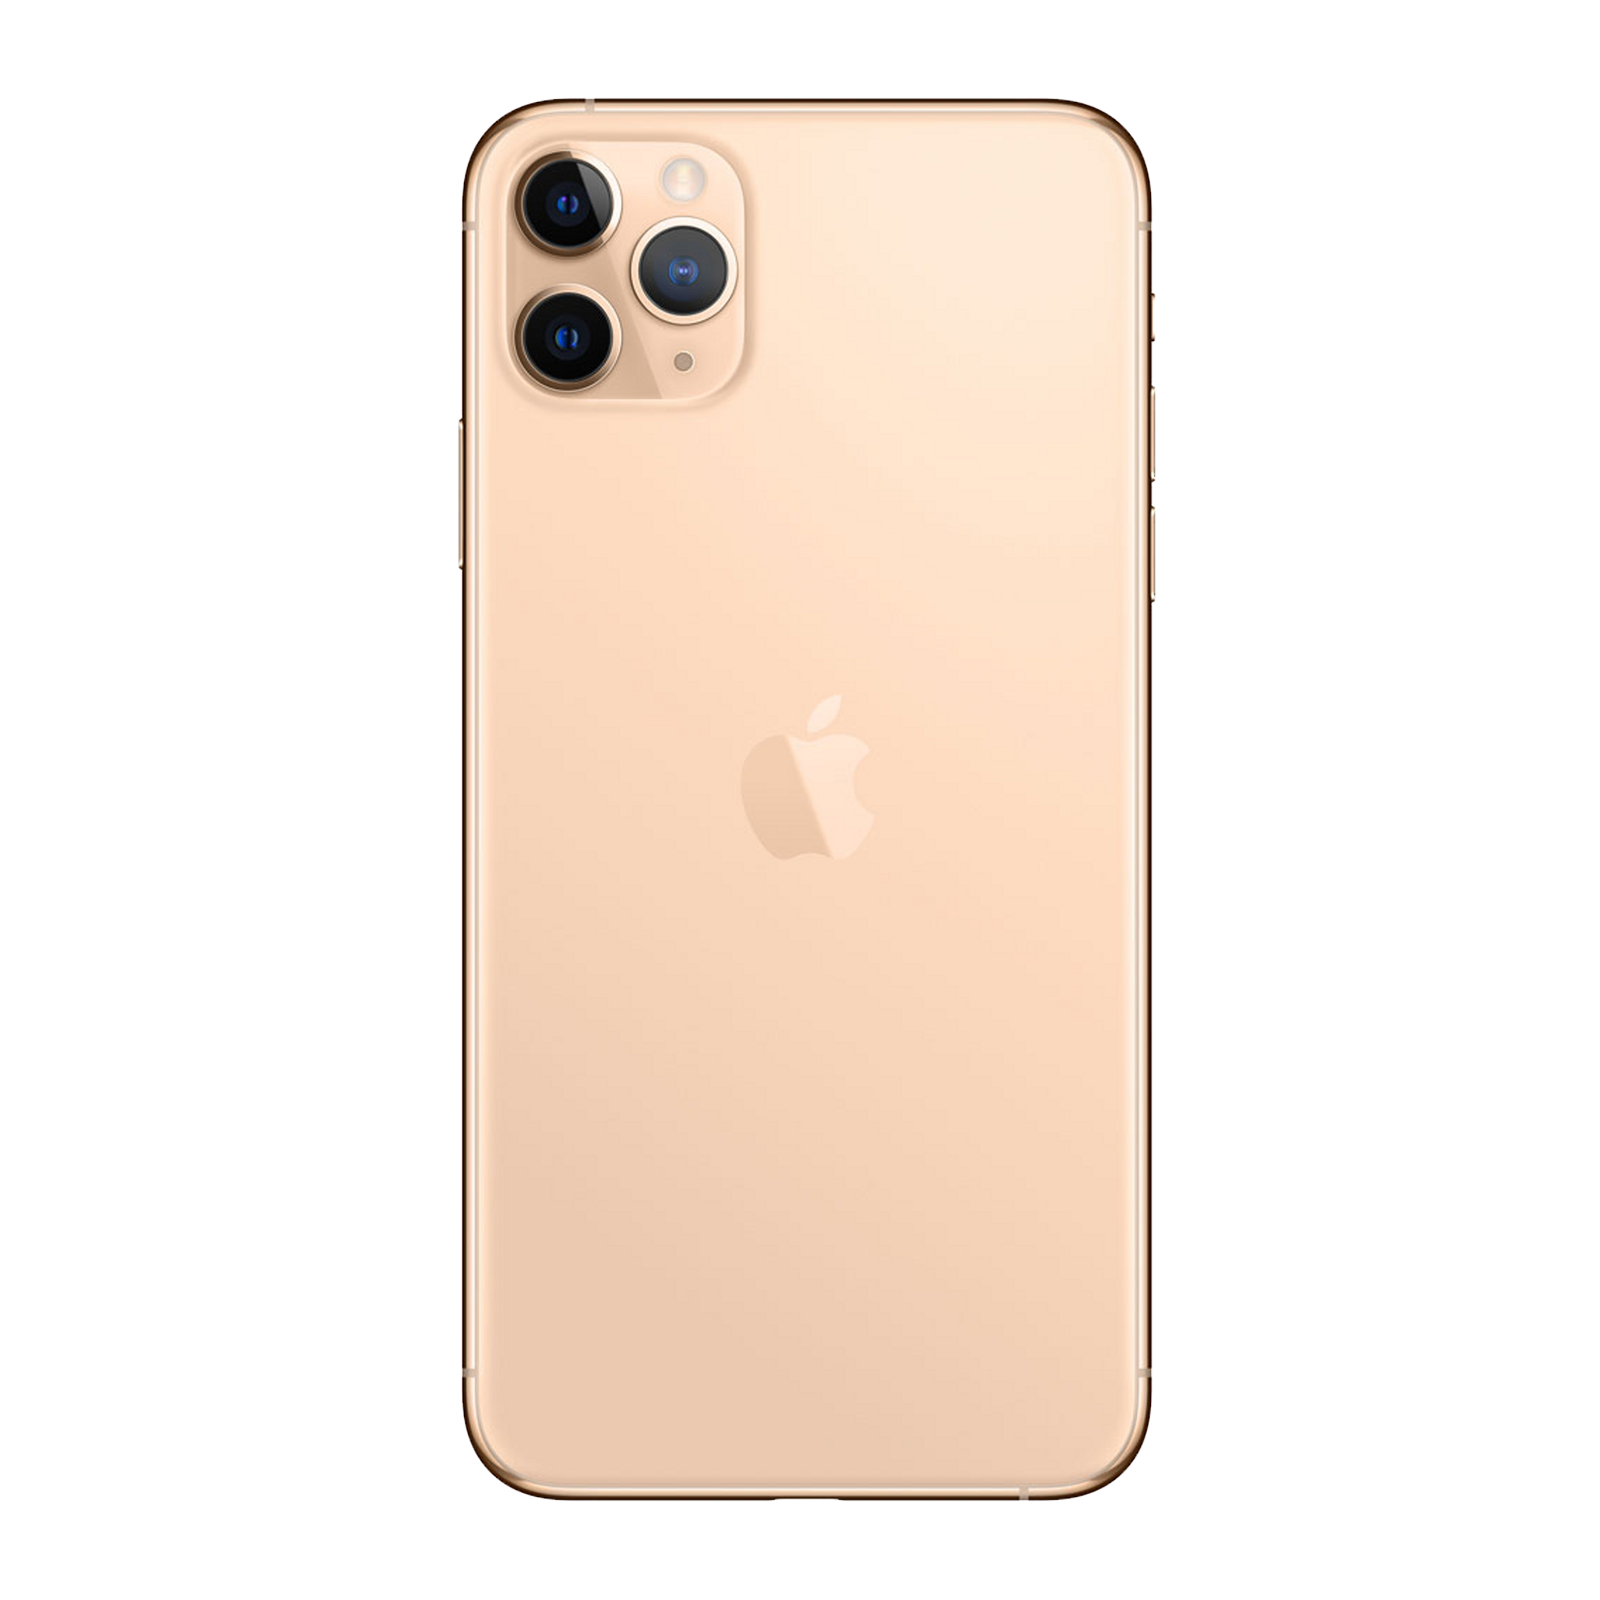 Apple iPhone 11 Pro 64GB Gold Fair - Unlocked